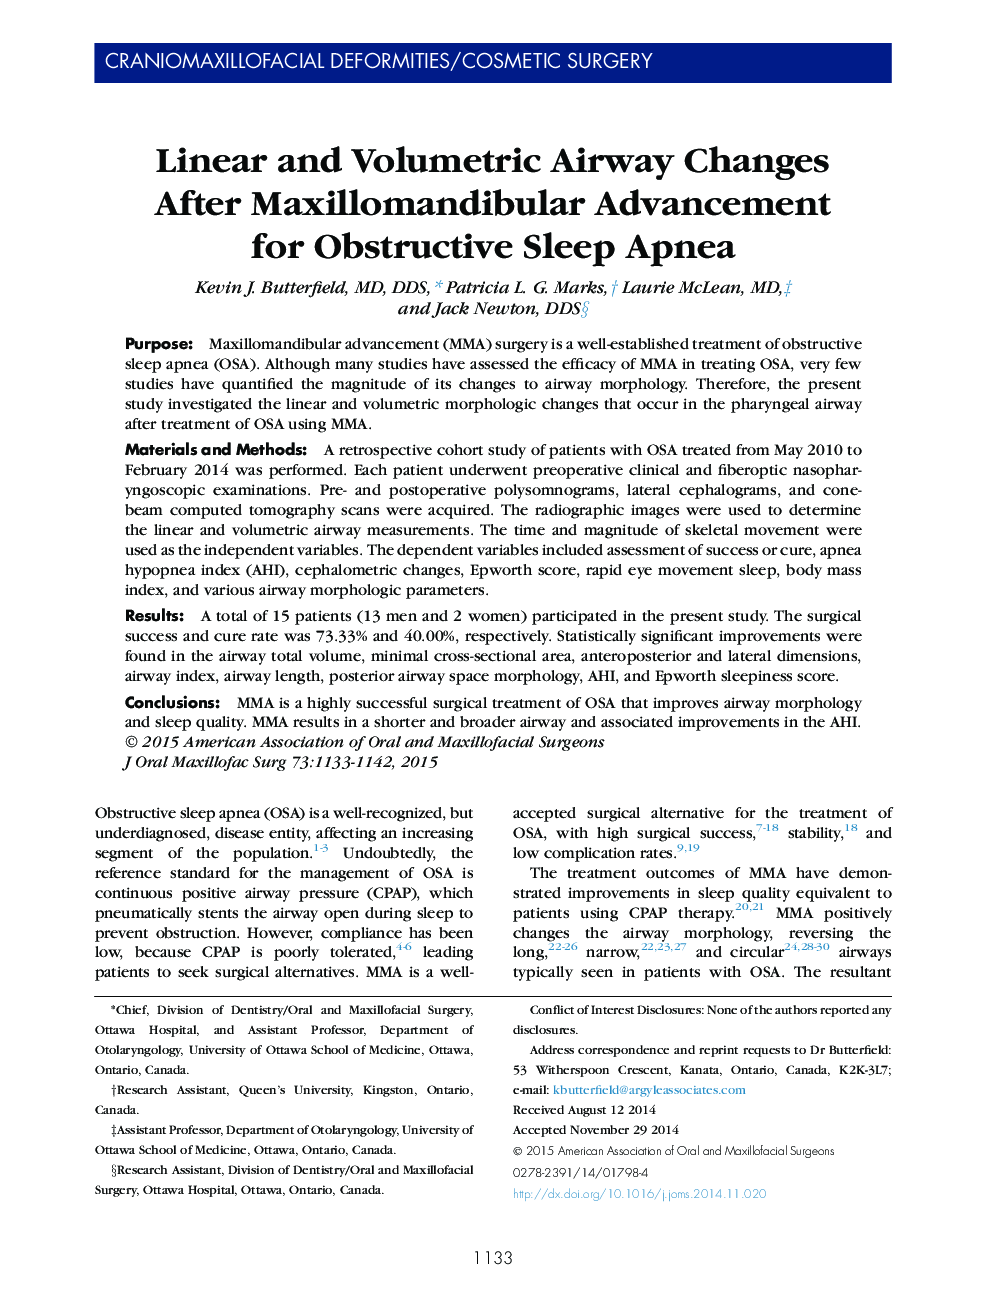 Linear and Volumetric Airway Changes After Maxillomandibular Advancement for Obstructive Sleep Apnea 